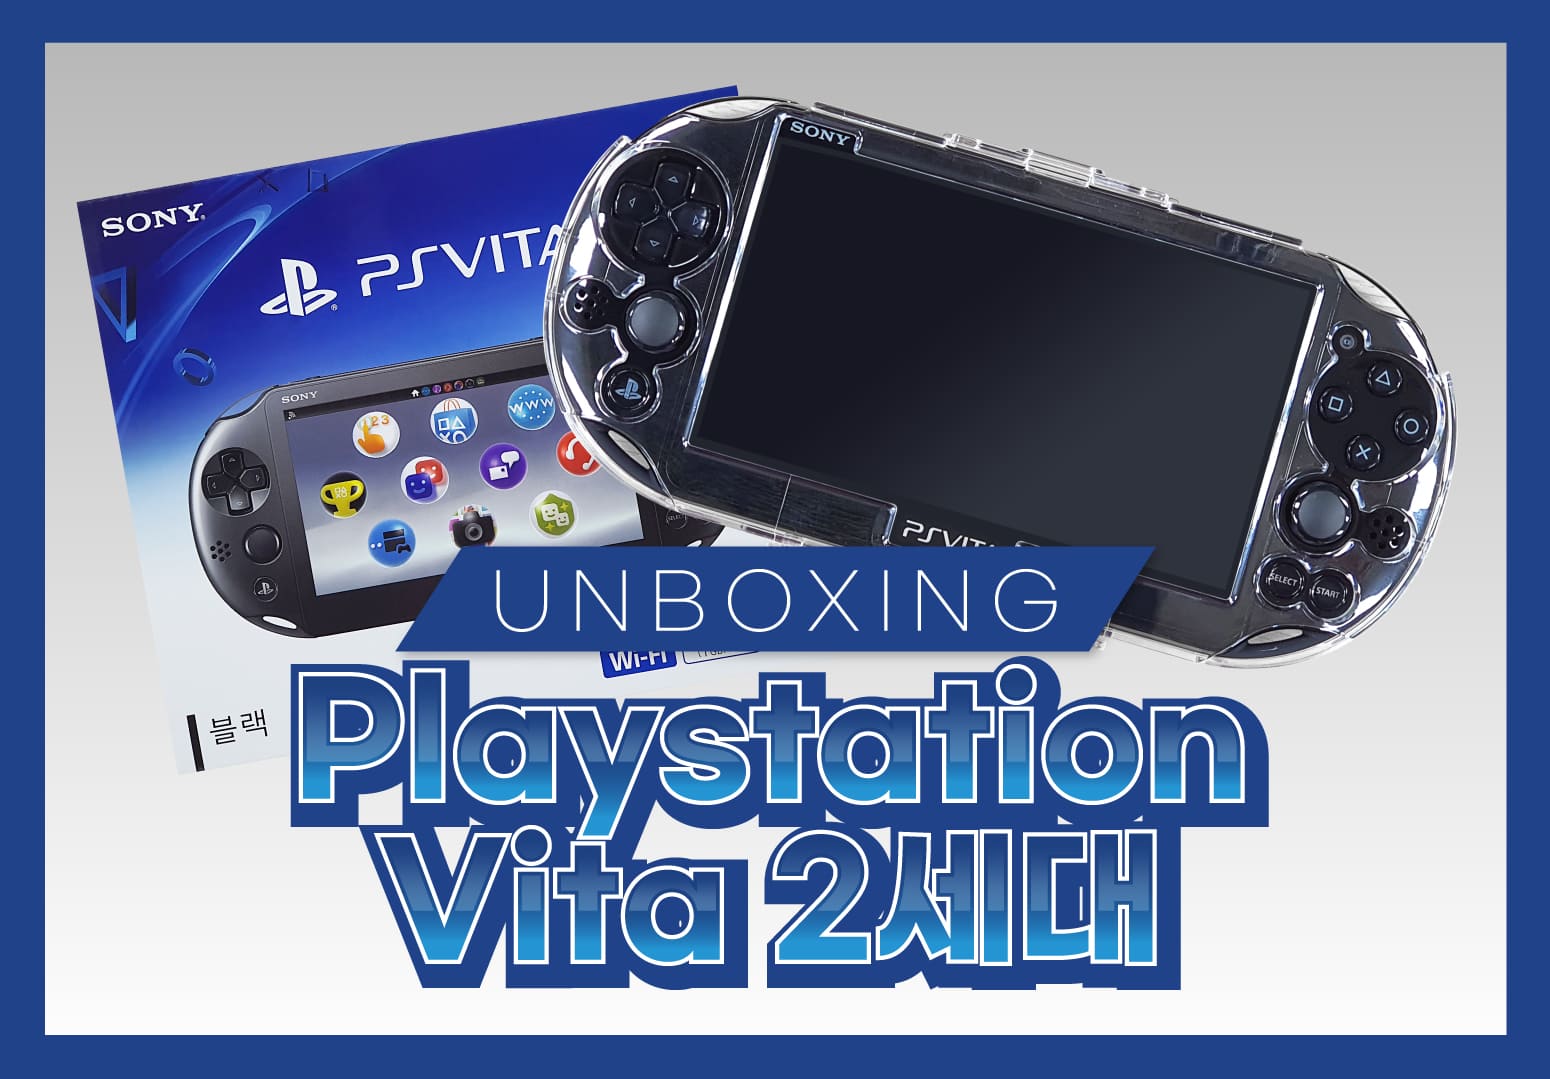 Playstation Vita 2세대 썸네일